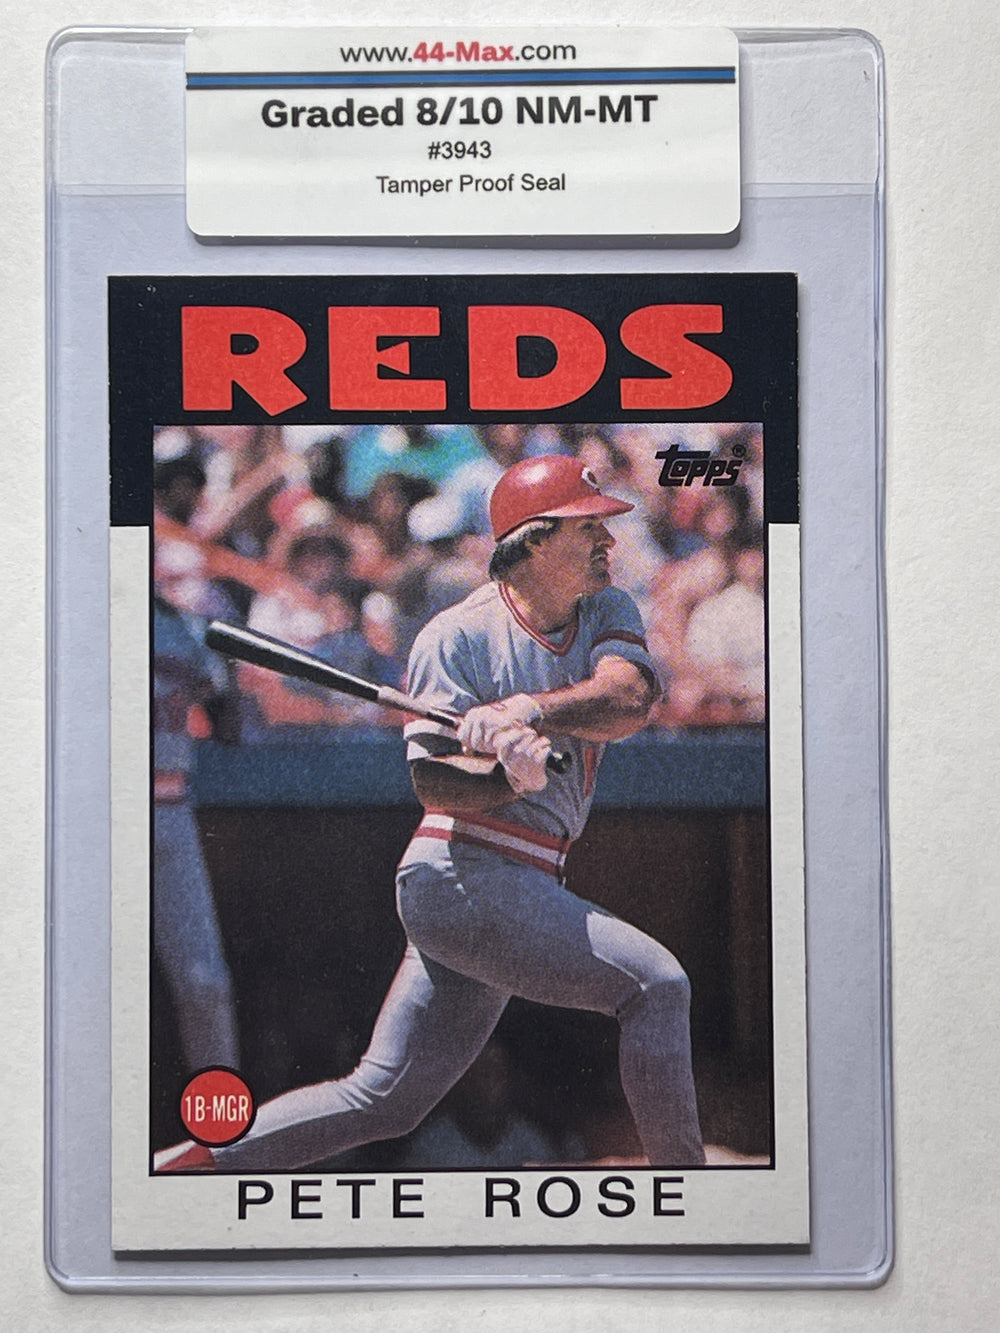 Pete Rose 1986 Topps Baseball Card. 44-Max 8/10 NM-MT #3943